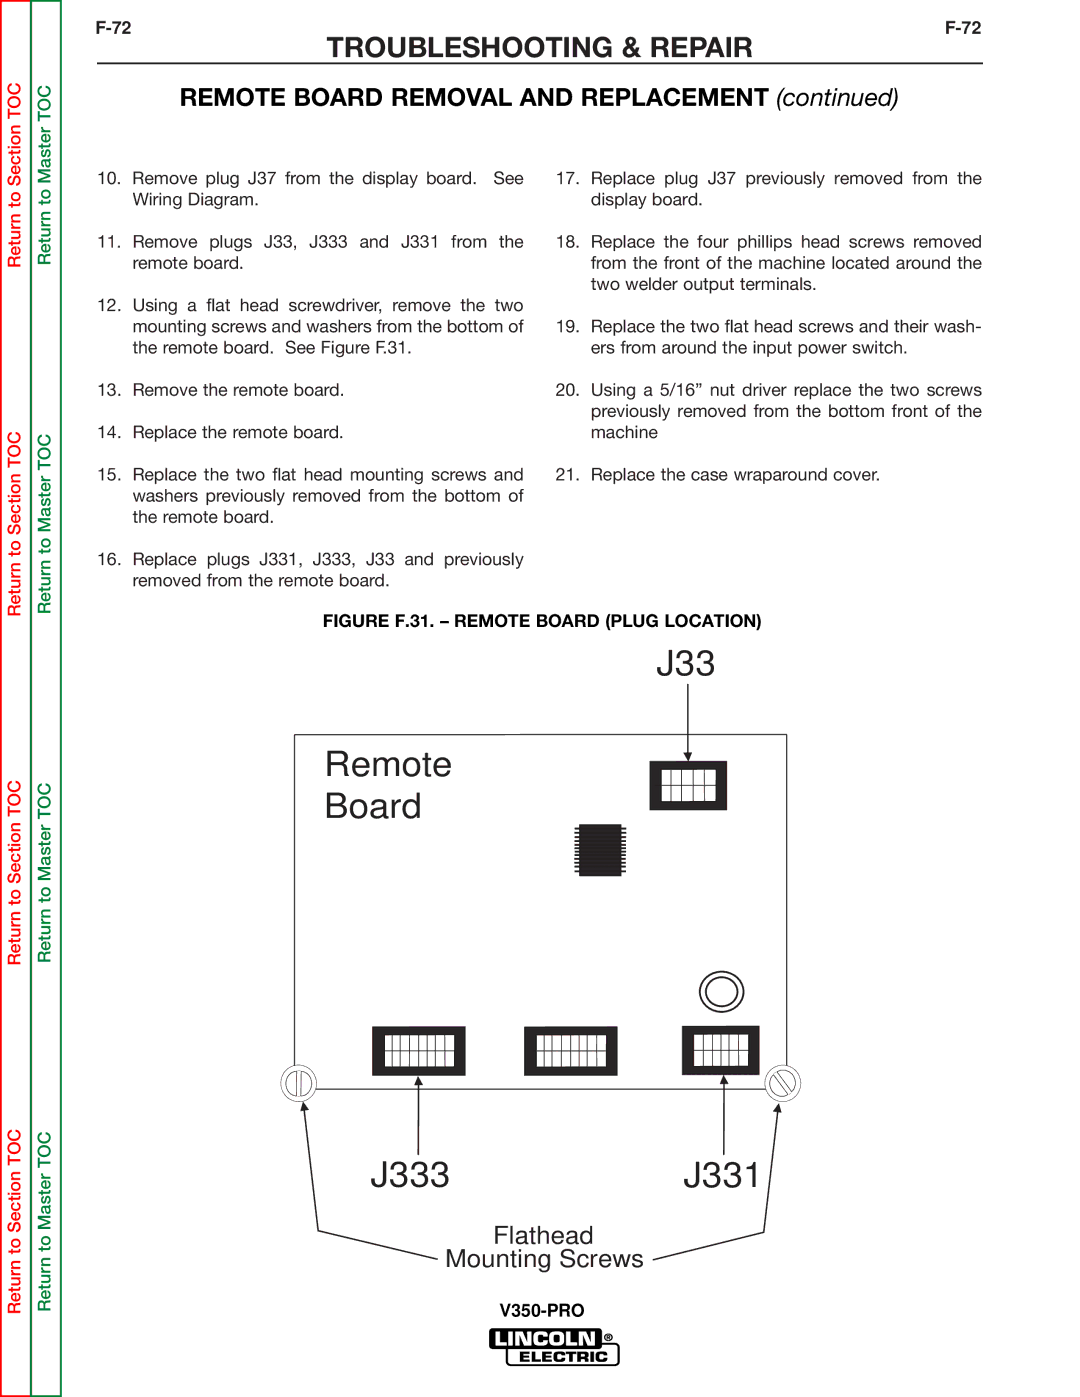 Lincoln Electric SVM158-A service manual J33 Remote Board J333J331 